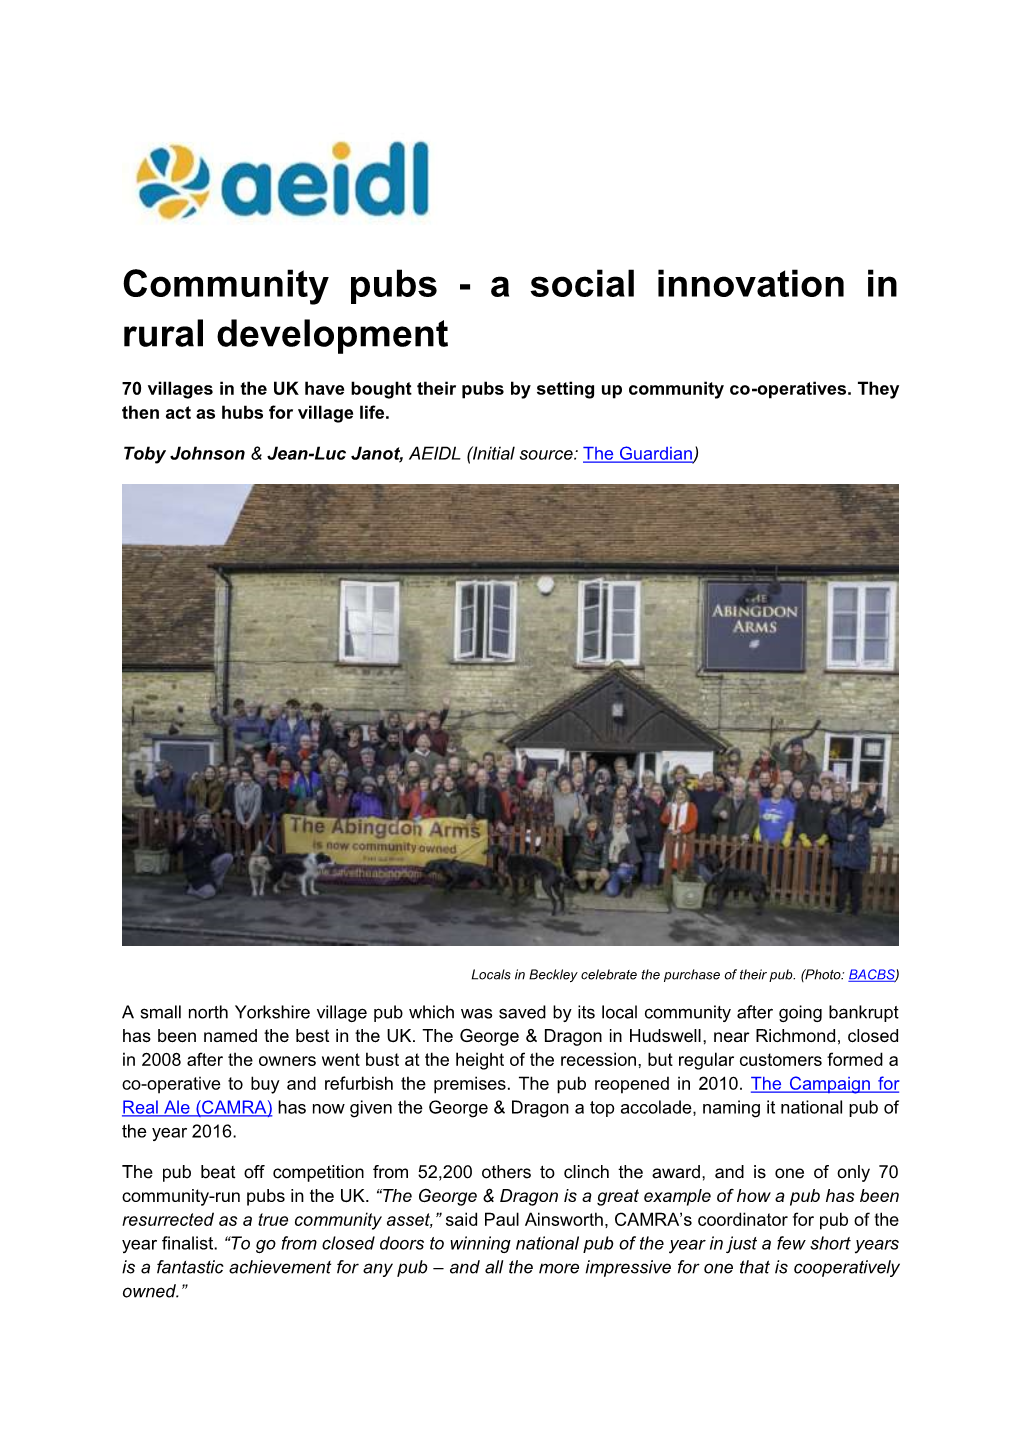 Community Pubs - a Social Innovation in Rural Development